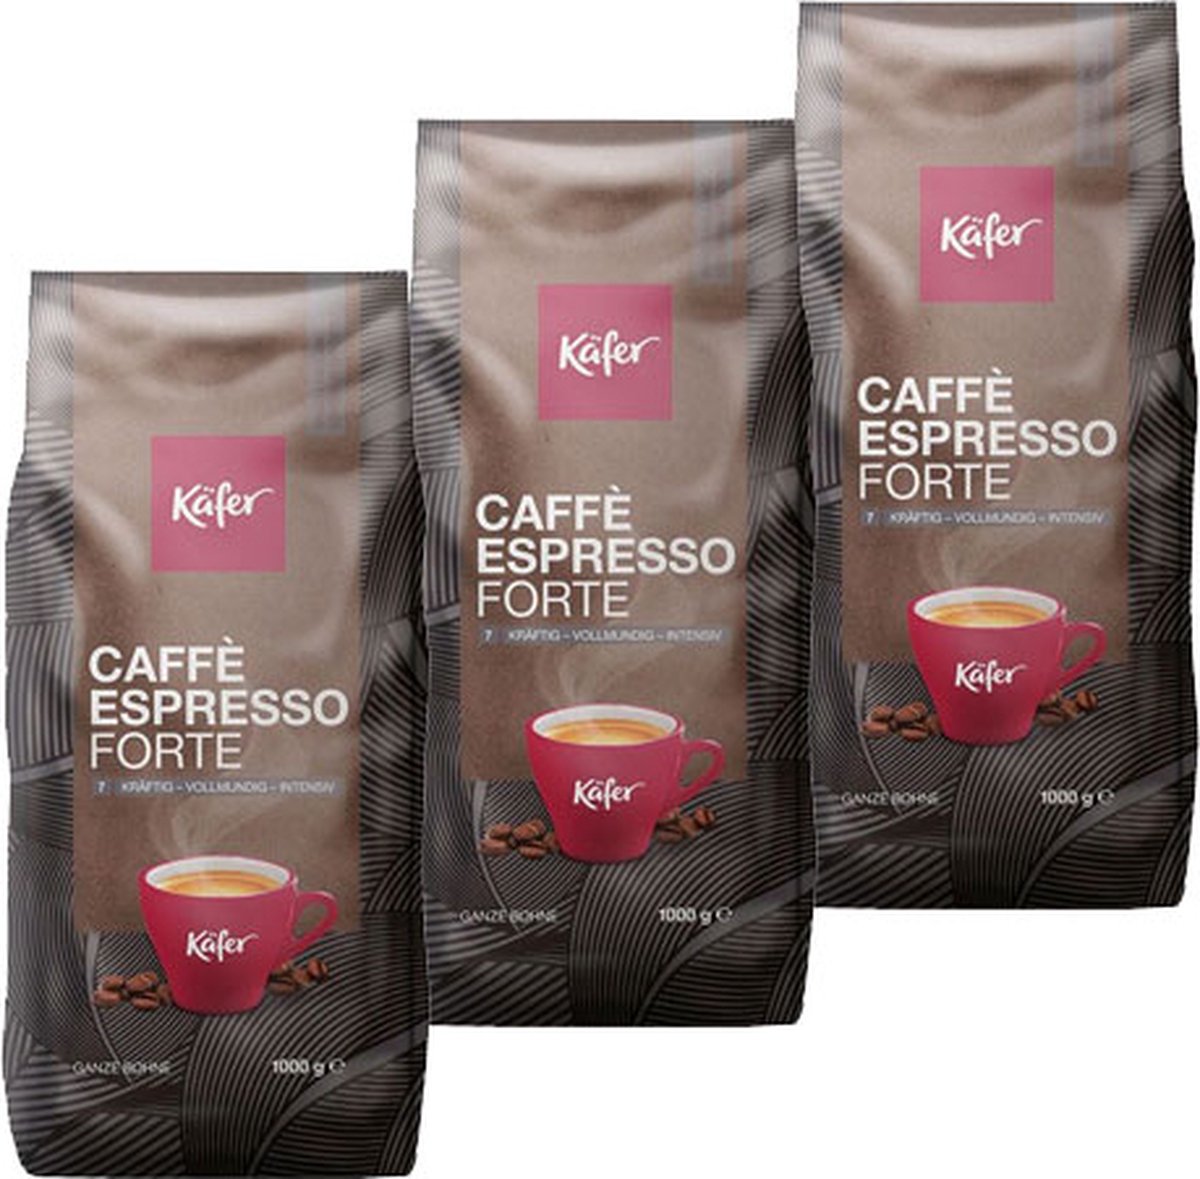 Käfer Caffè Espresso Forte - koffiebonen - 3 x 1 kilo